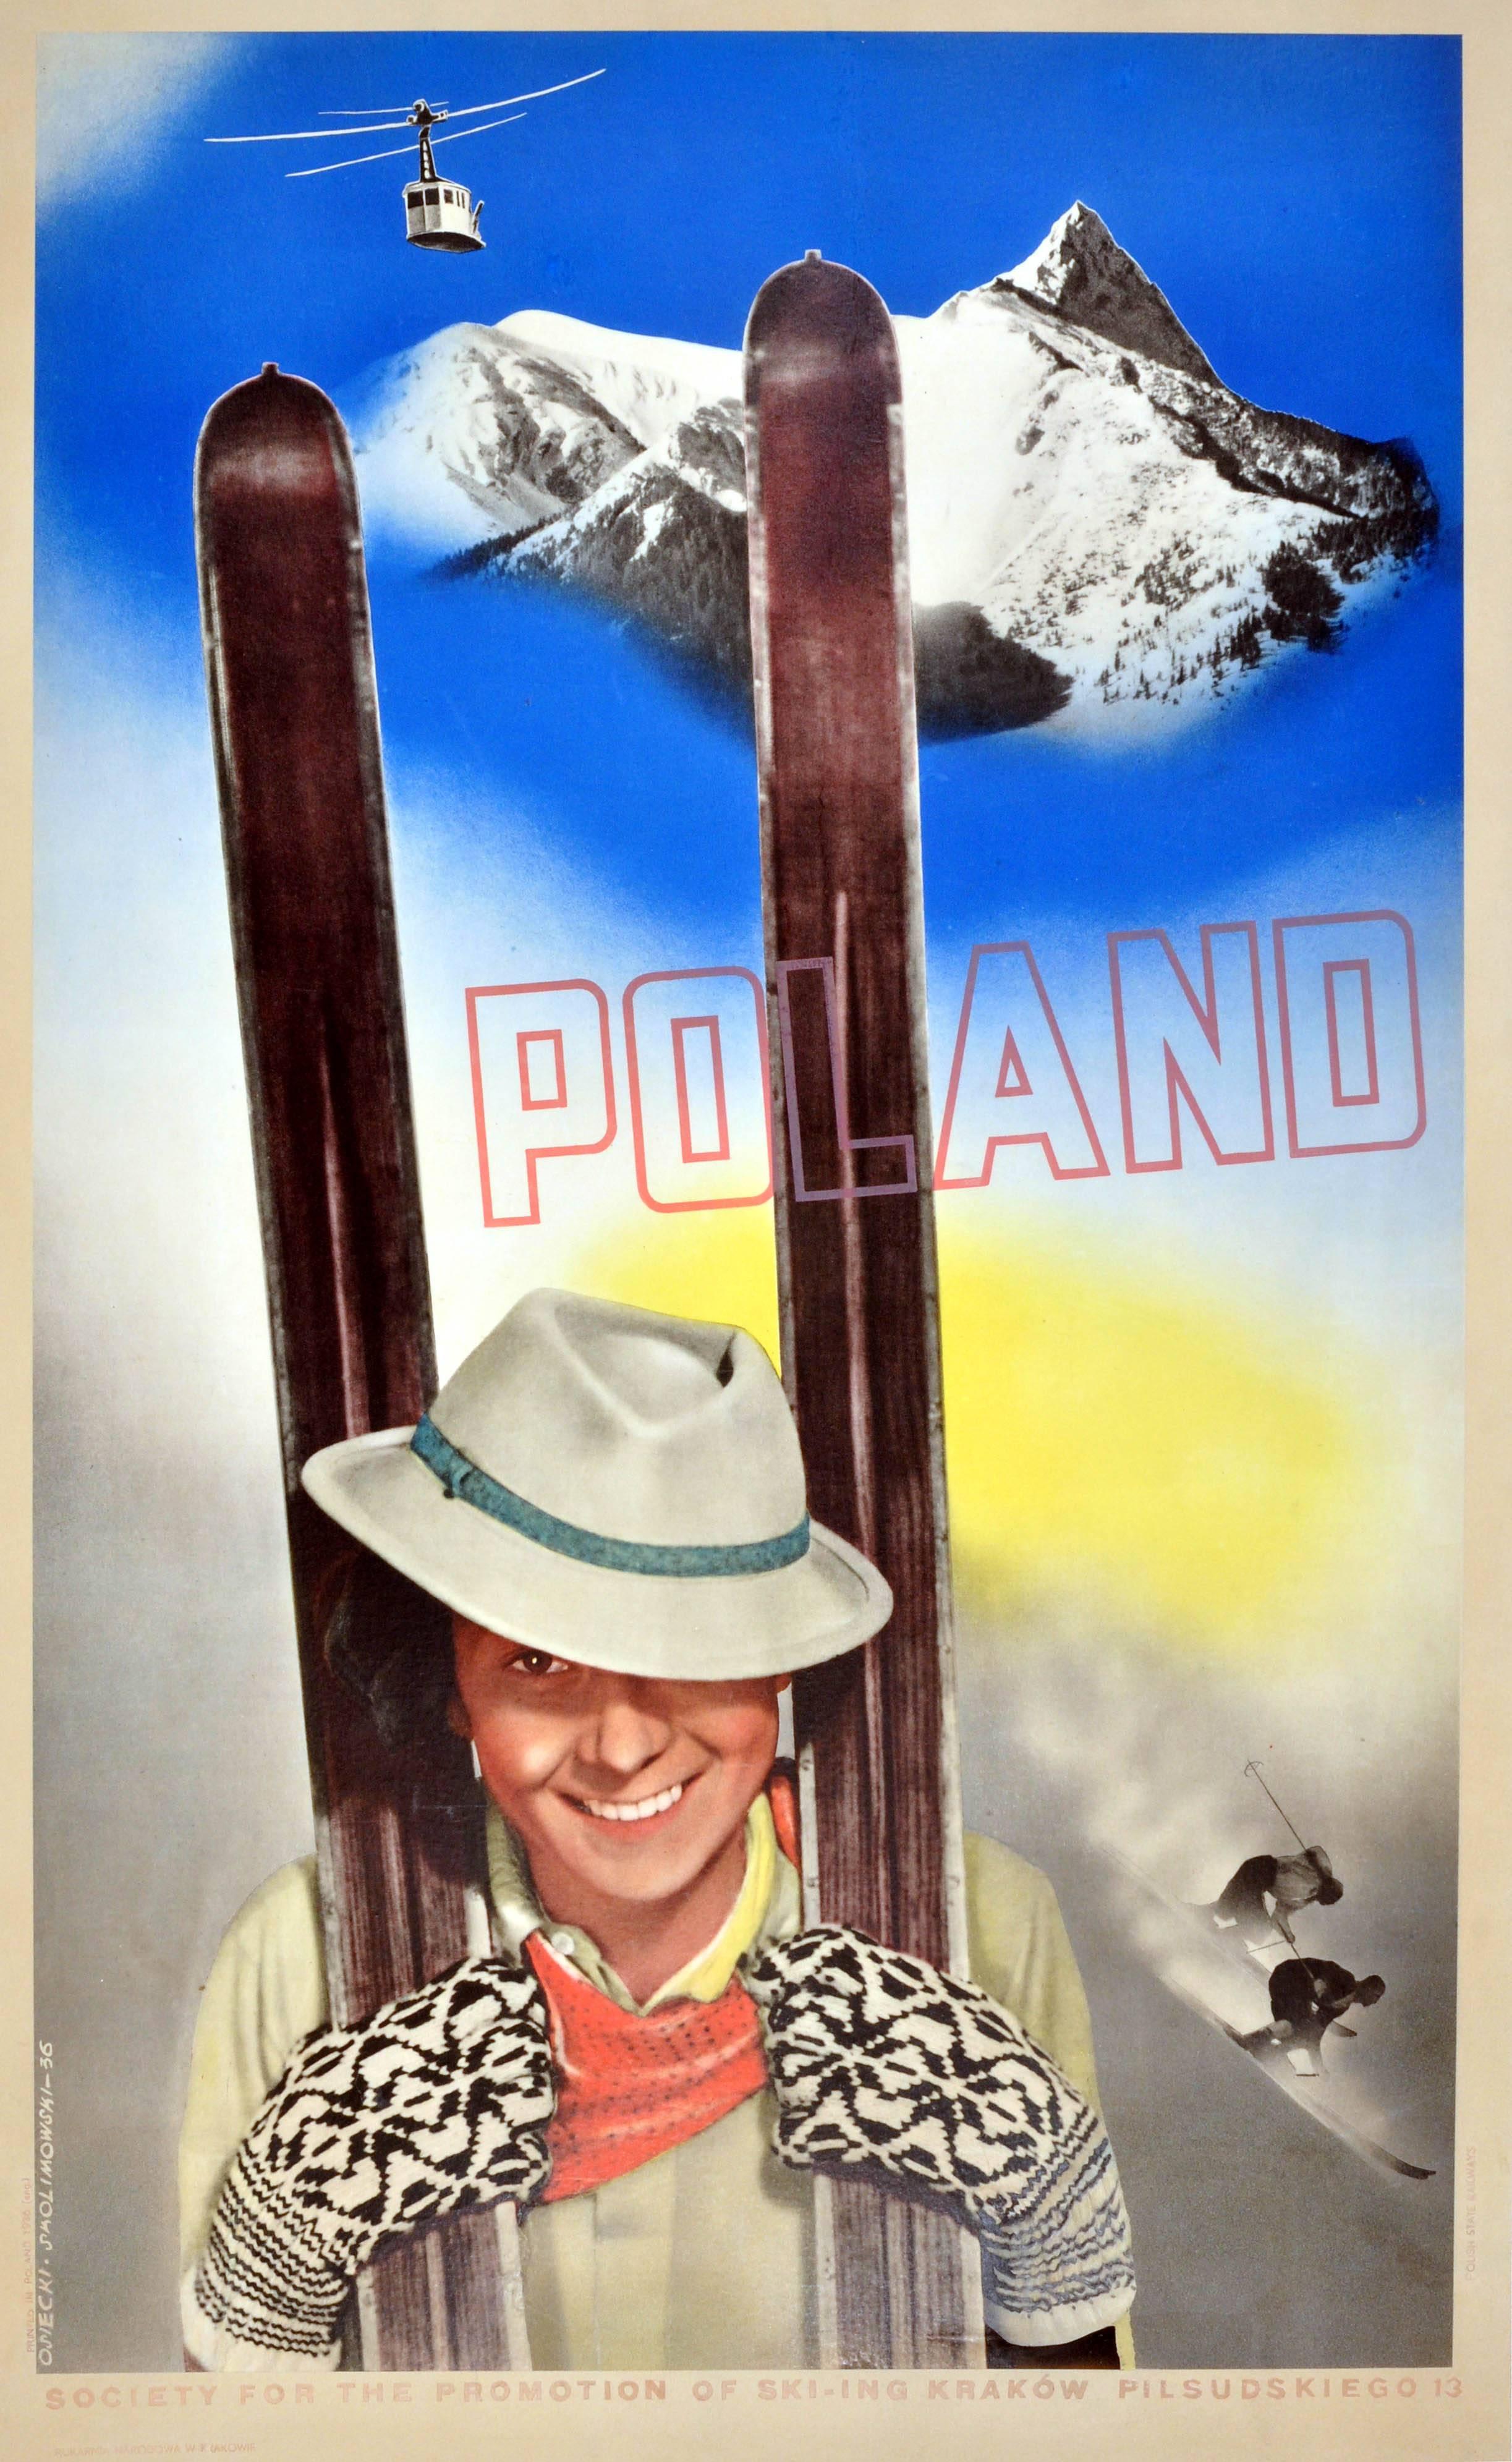 Stefan Osiecki and Jerzy Skolimowski Print - Rare Original Vintage Polish Skiing Poster By Osiecki & Skolimo - Ski In Poland